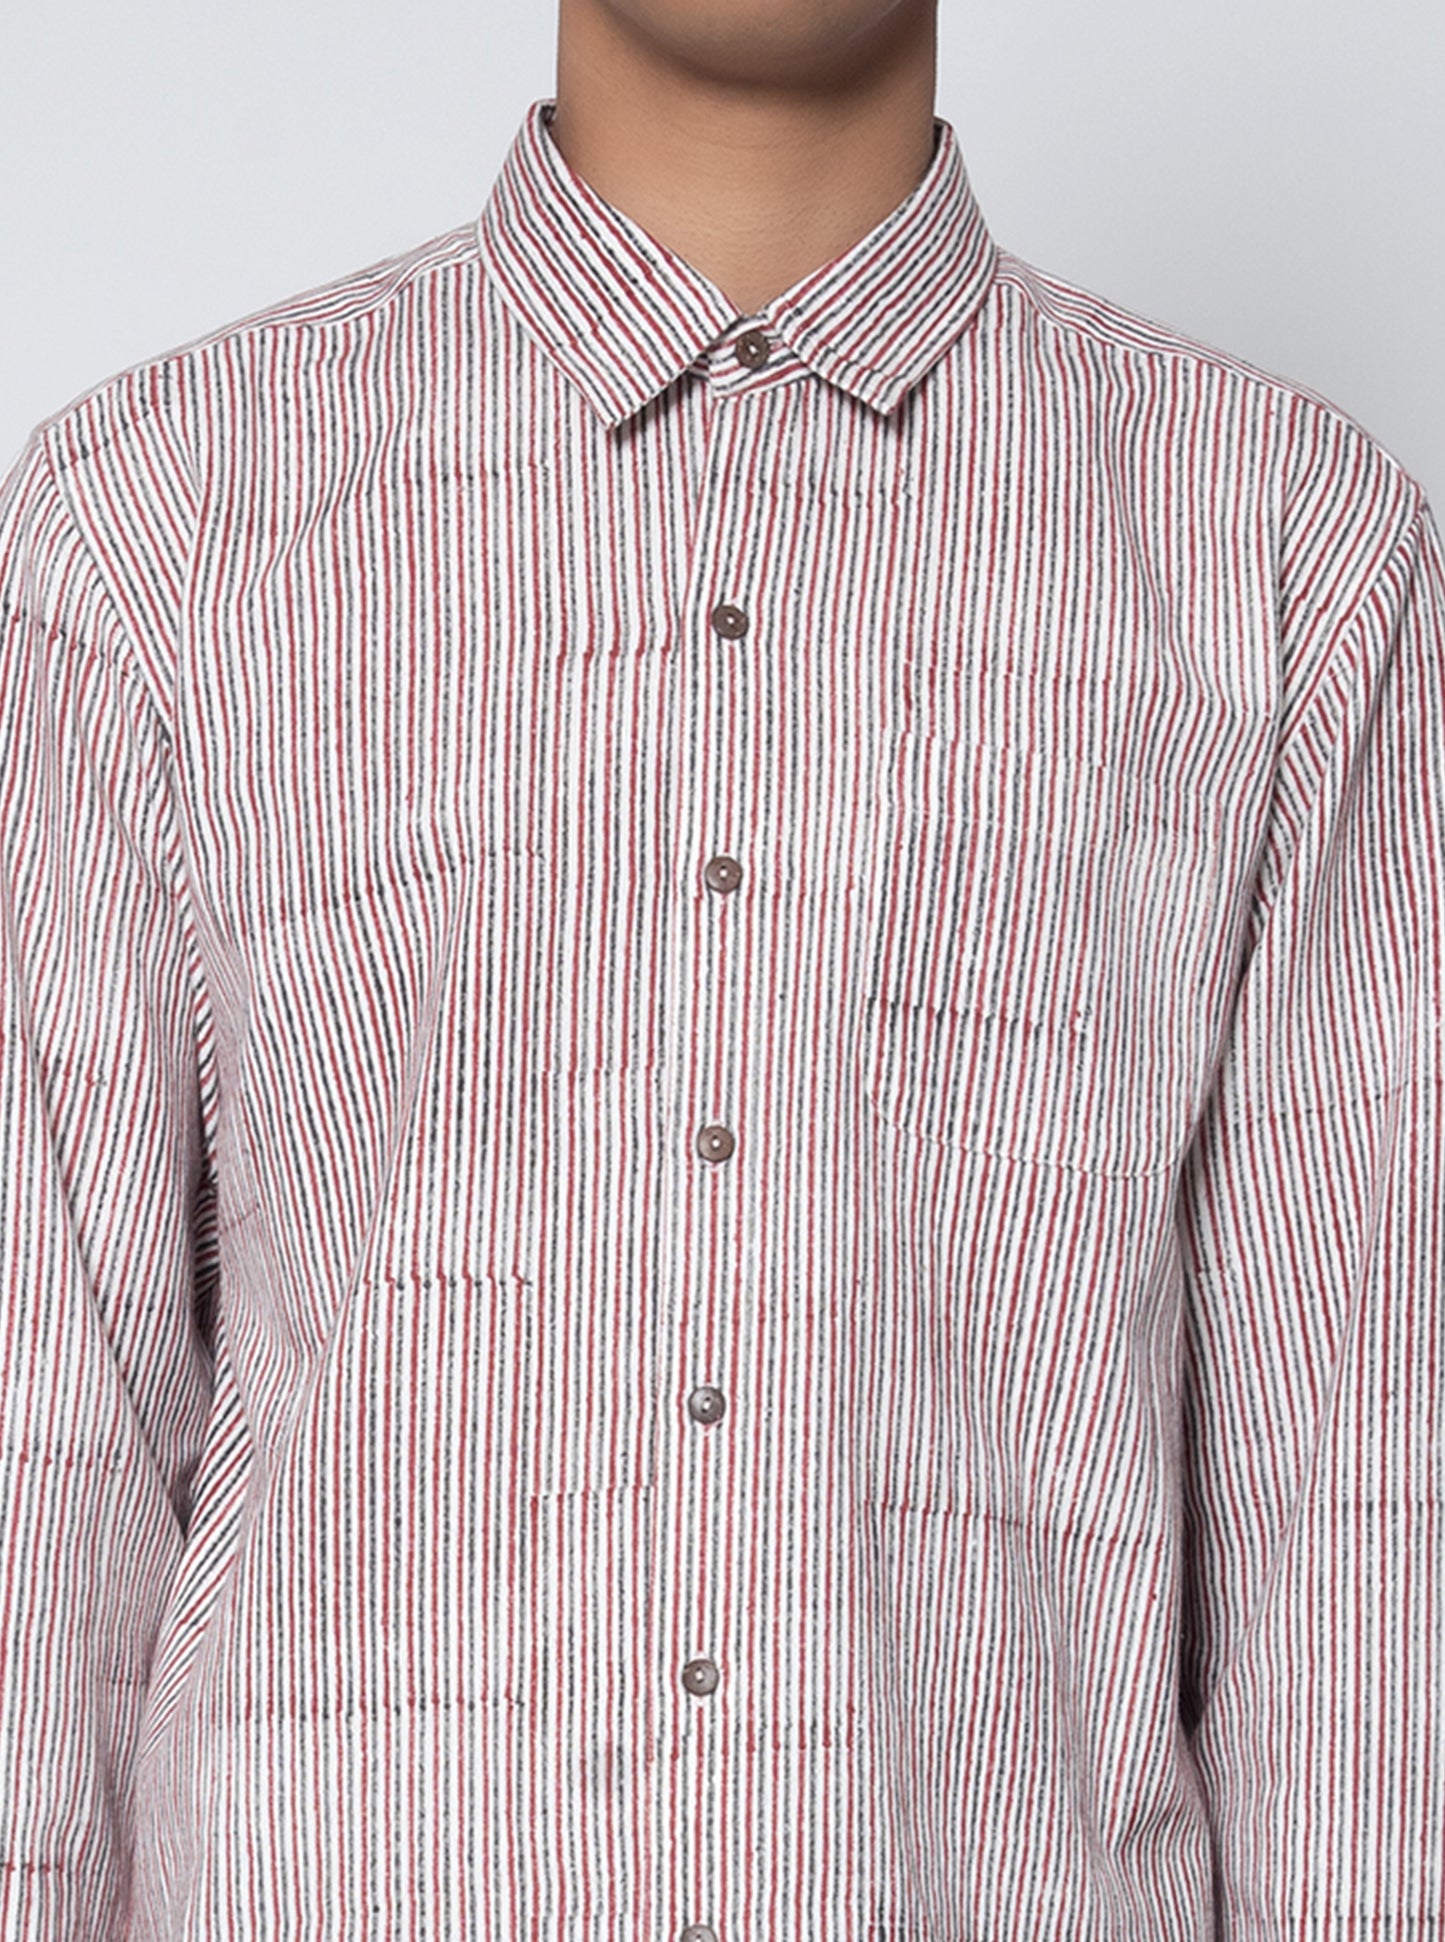 Printed Pencil Stripe Casual Shirt